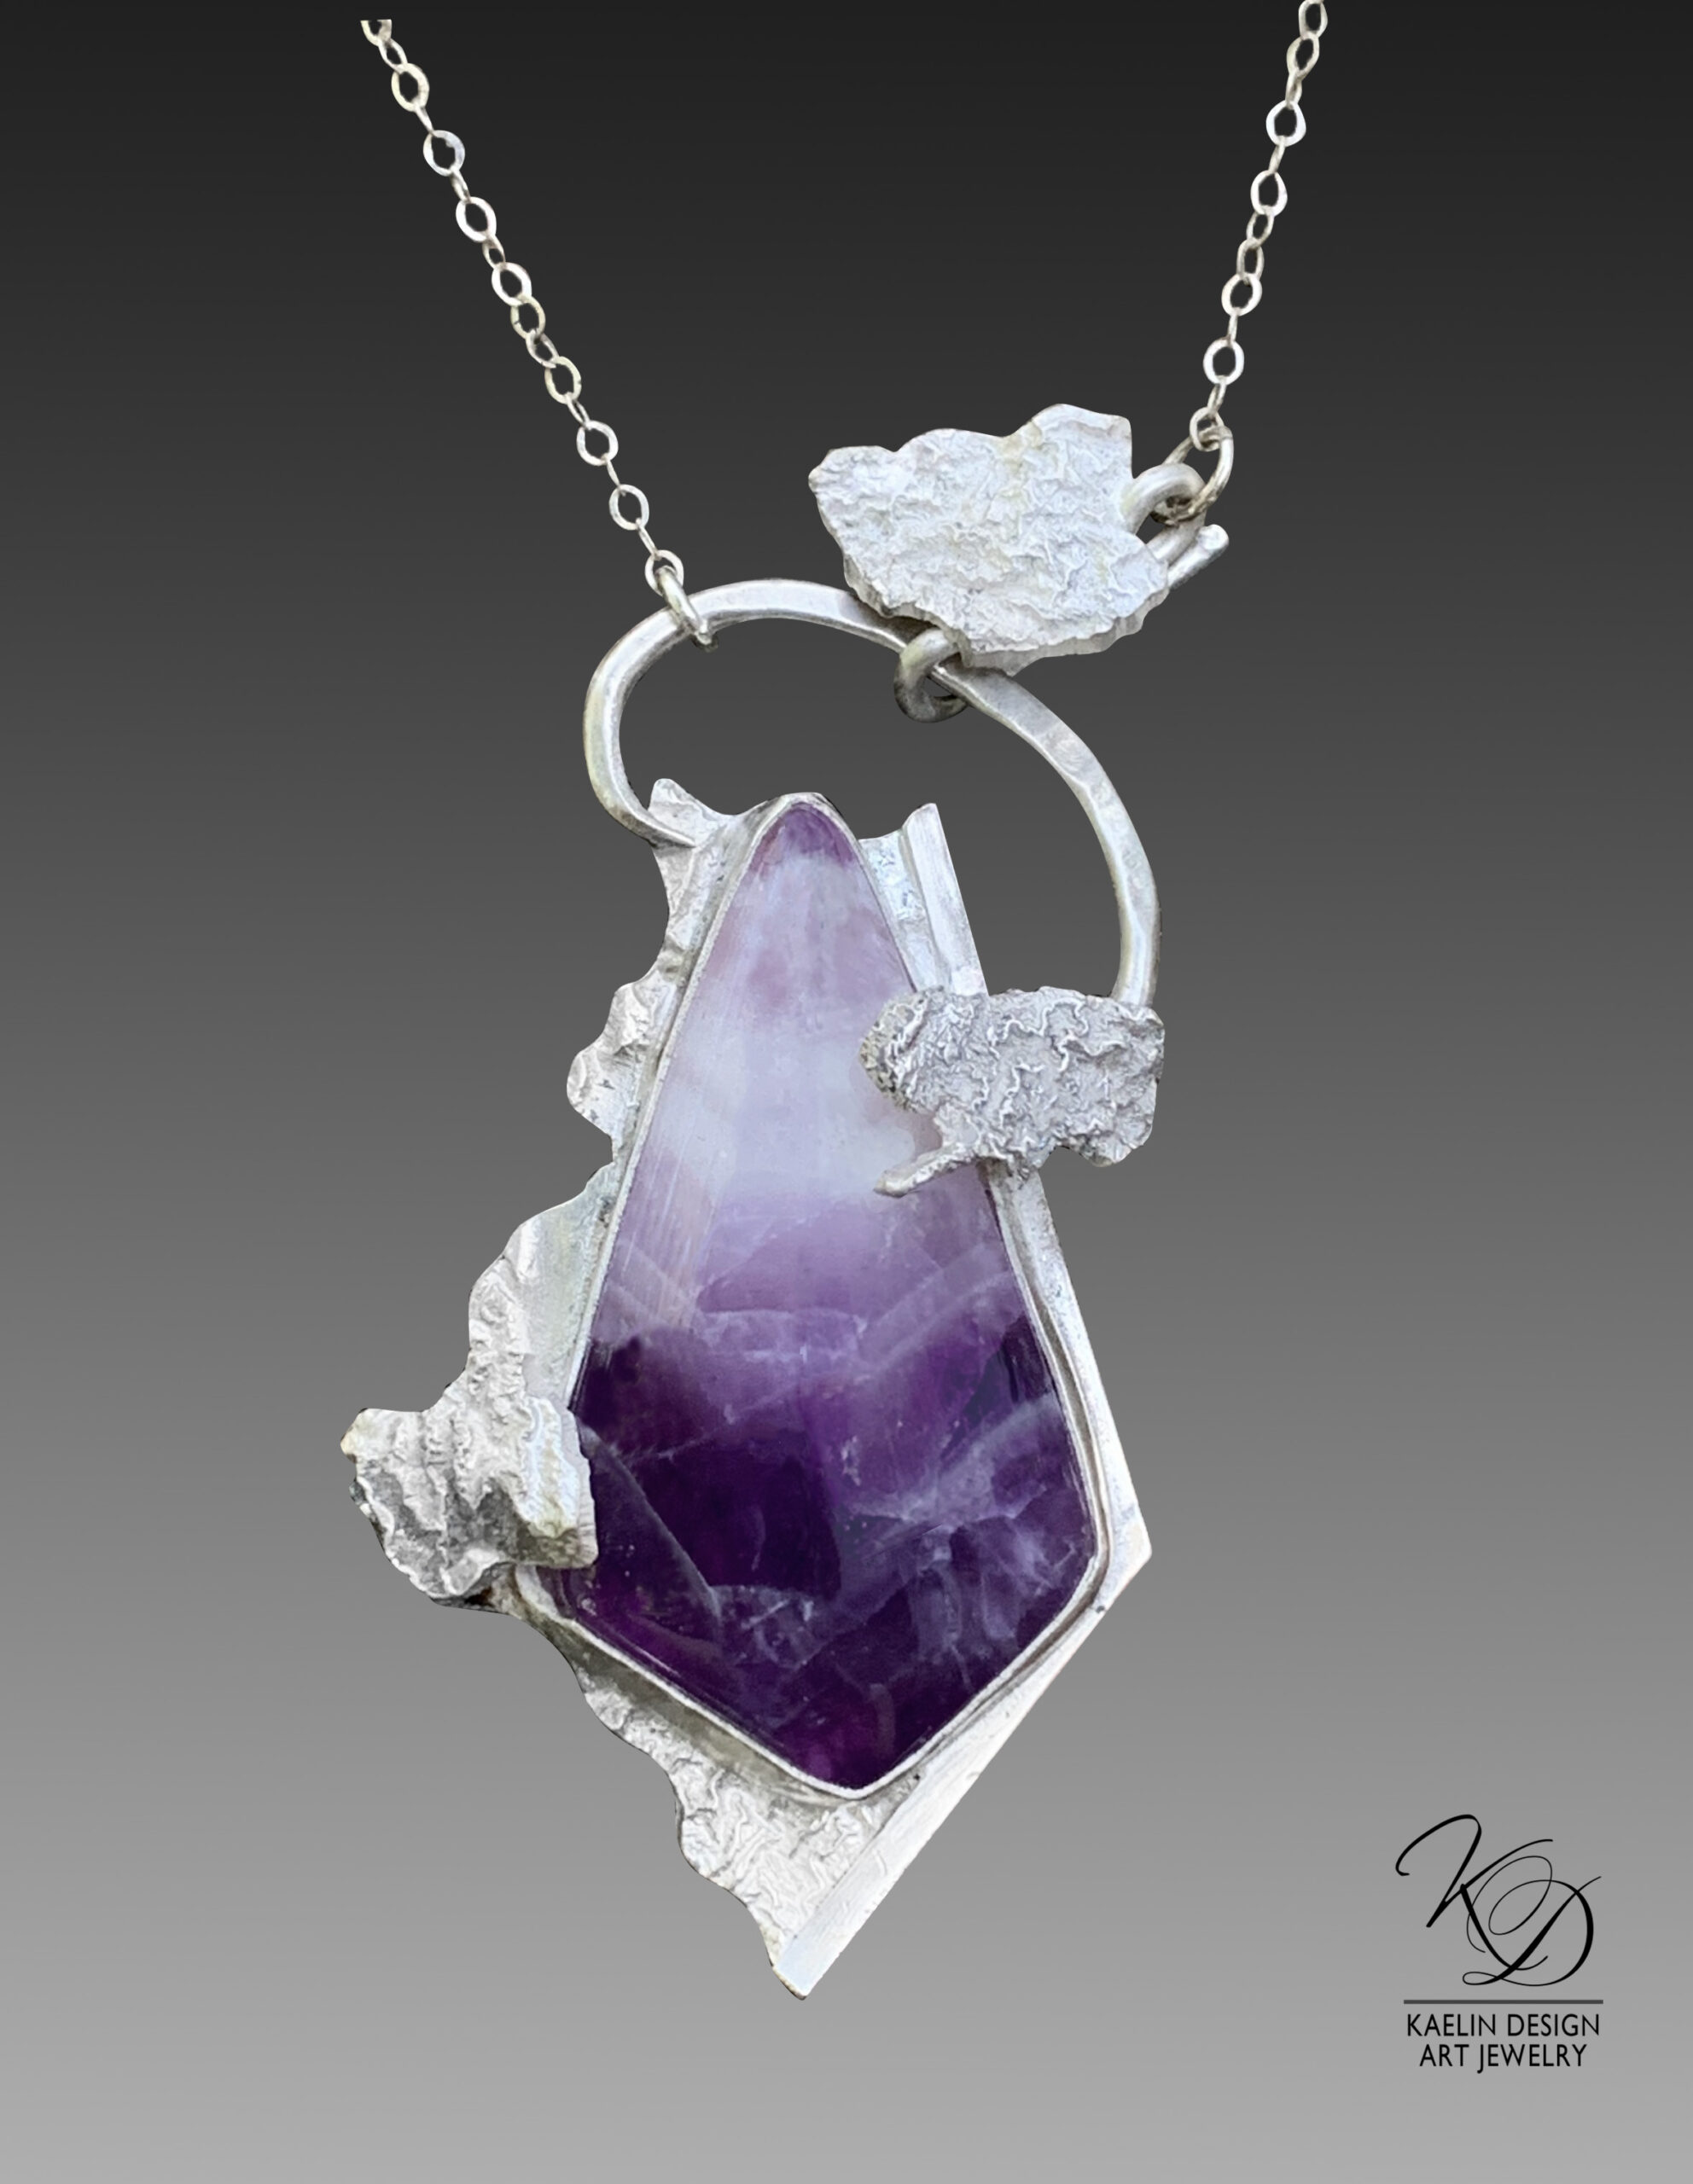 Silver Linings Amethyst Storm Fine Art Jewelry necklace by Kaelin Design